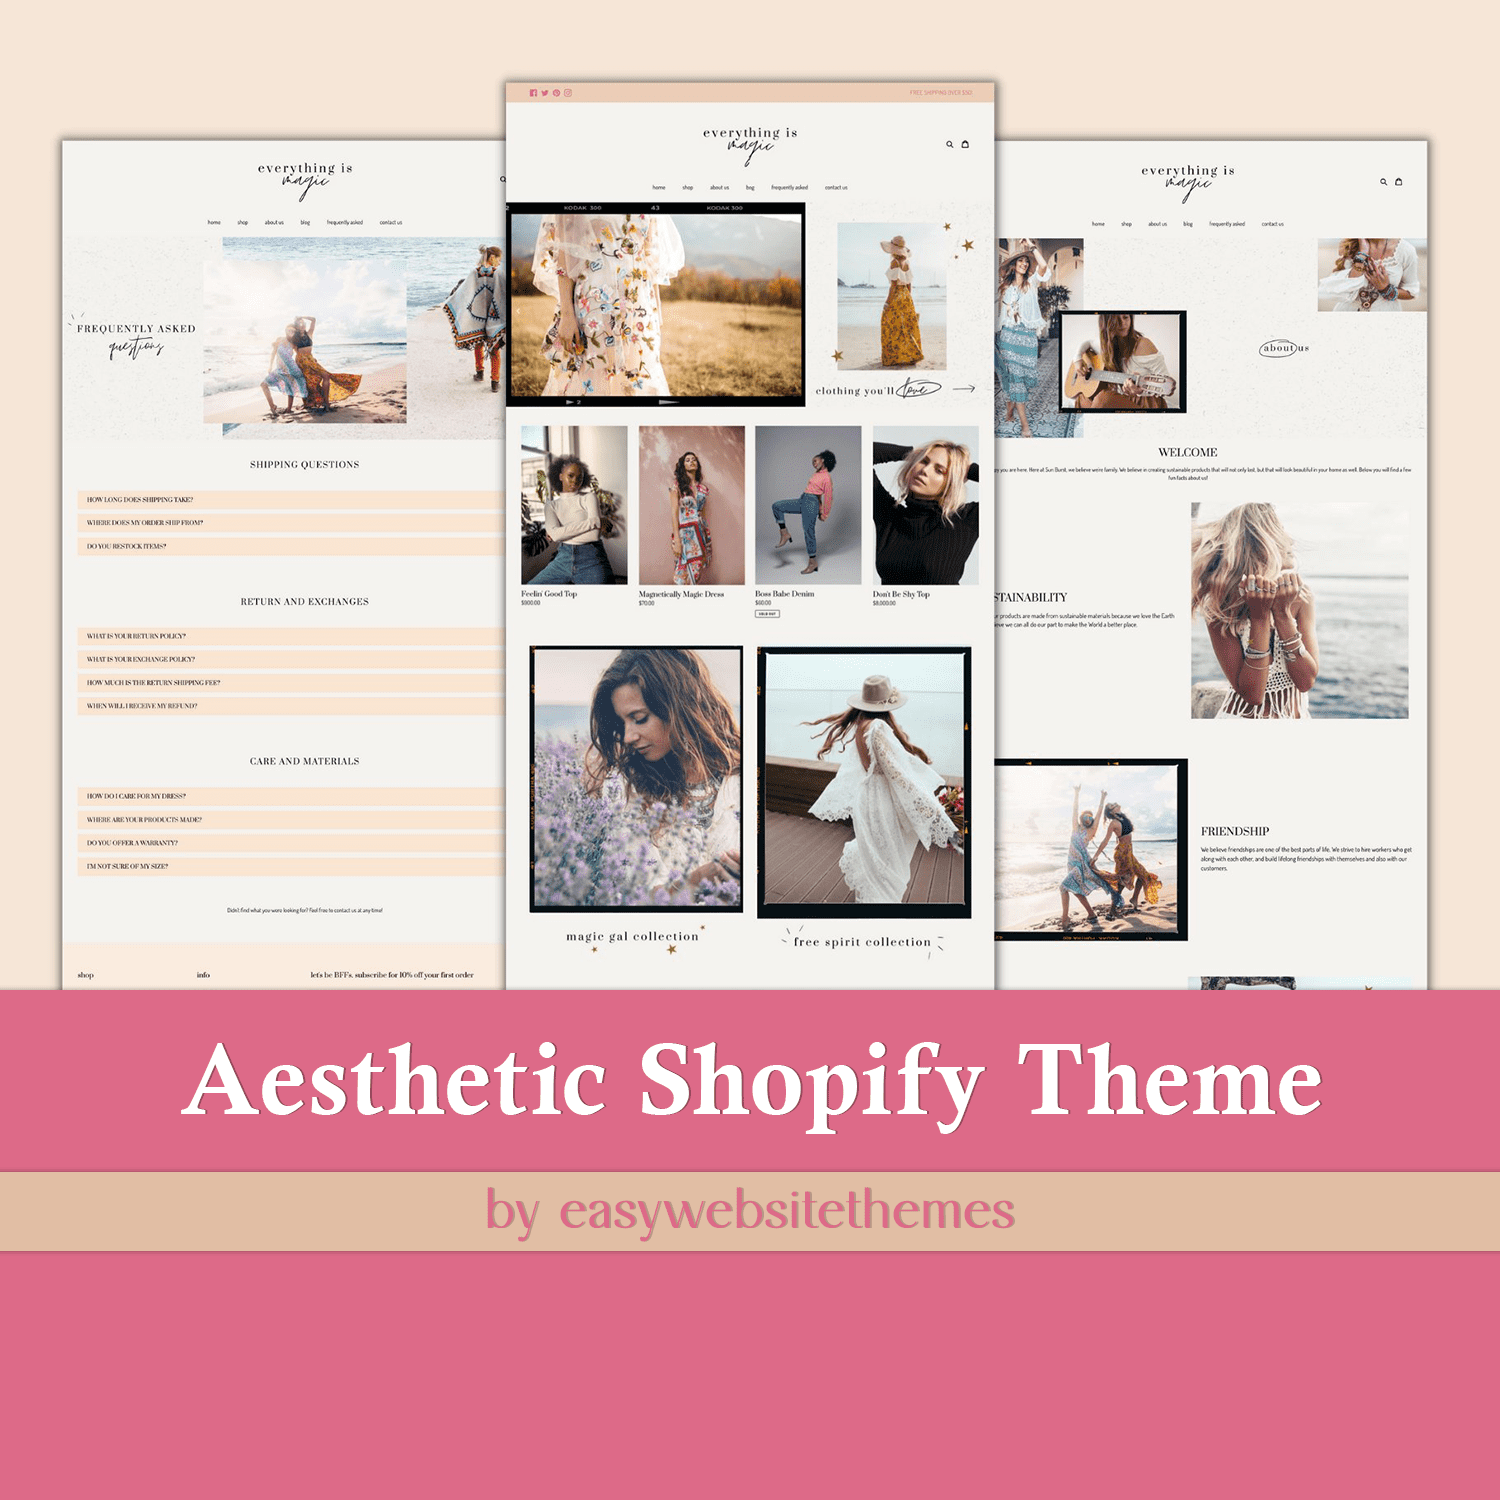 Aesthetic Shopify Theme.